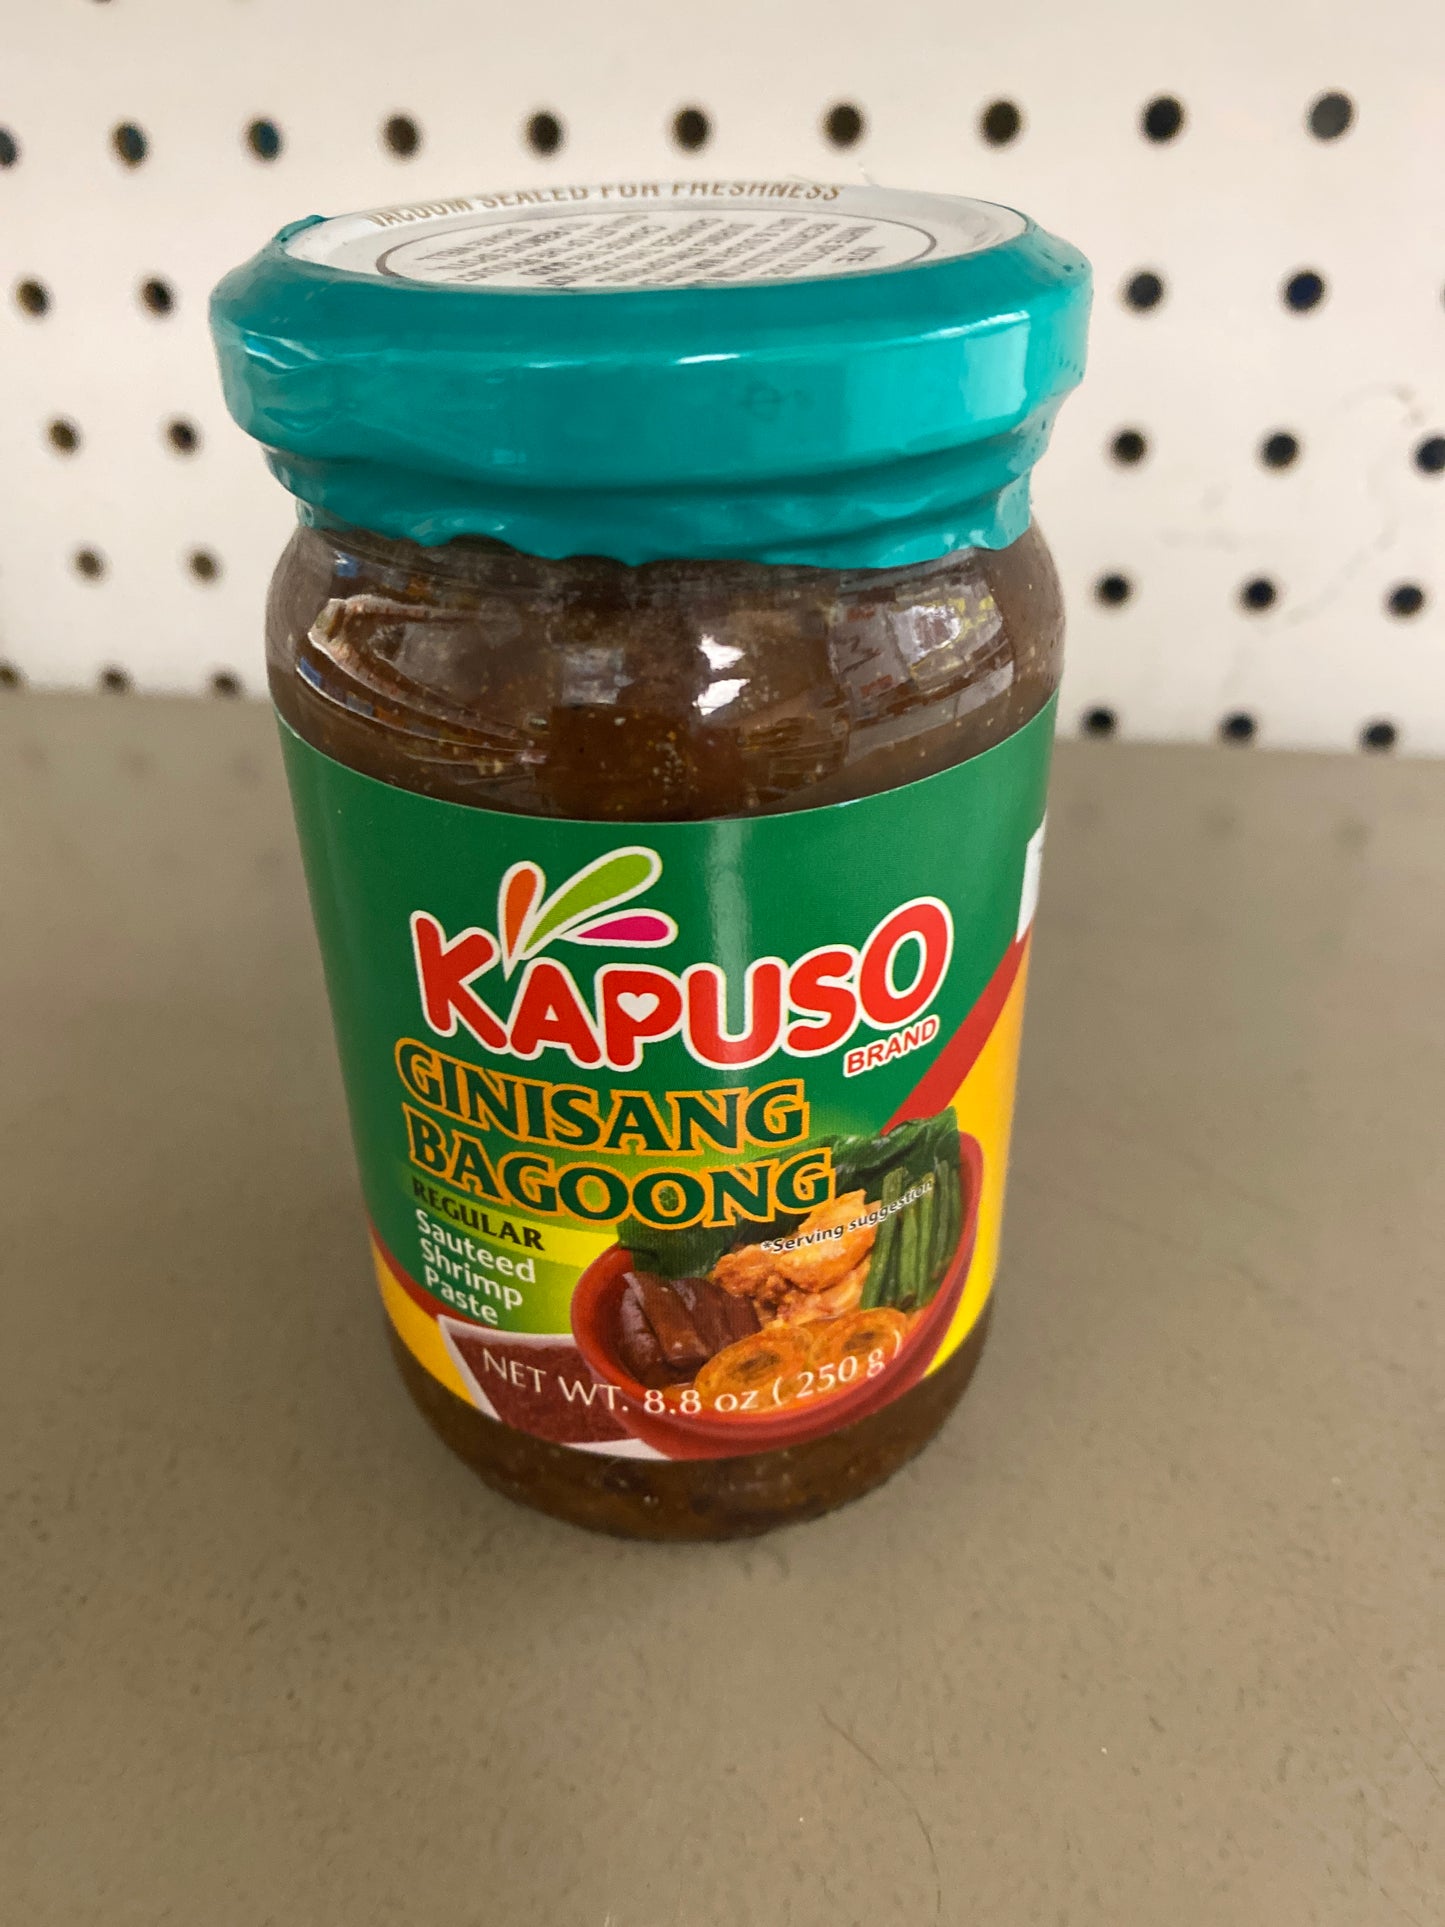 Kapuso Regular Ginisang Bagoong | Regular Sauteed Shrimp Paste - 8.8oz